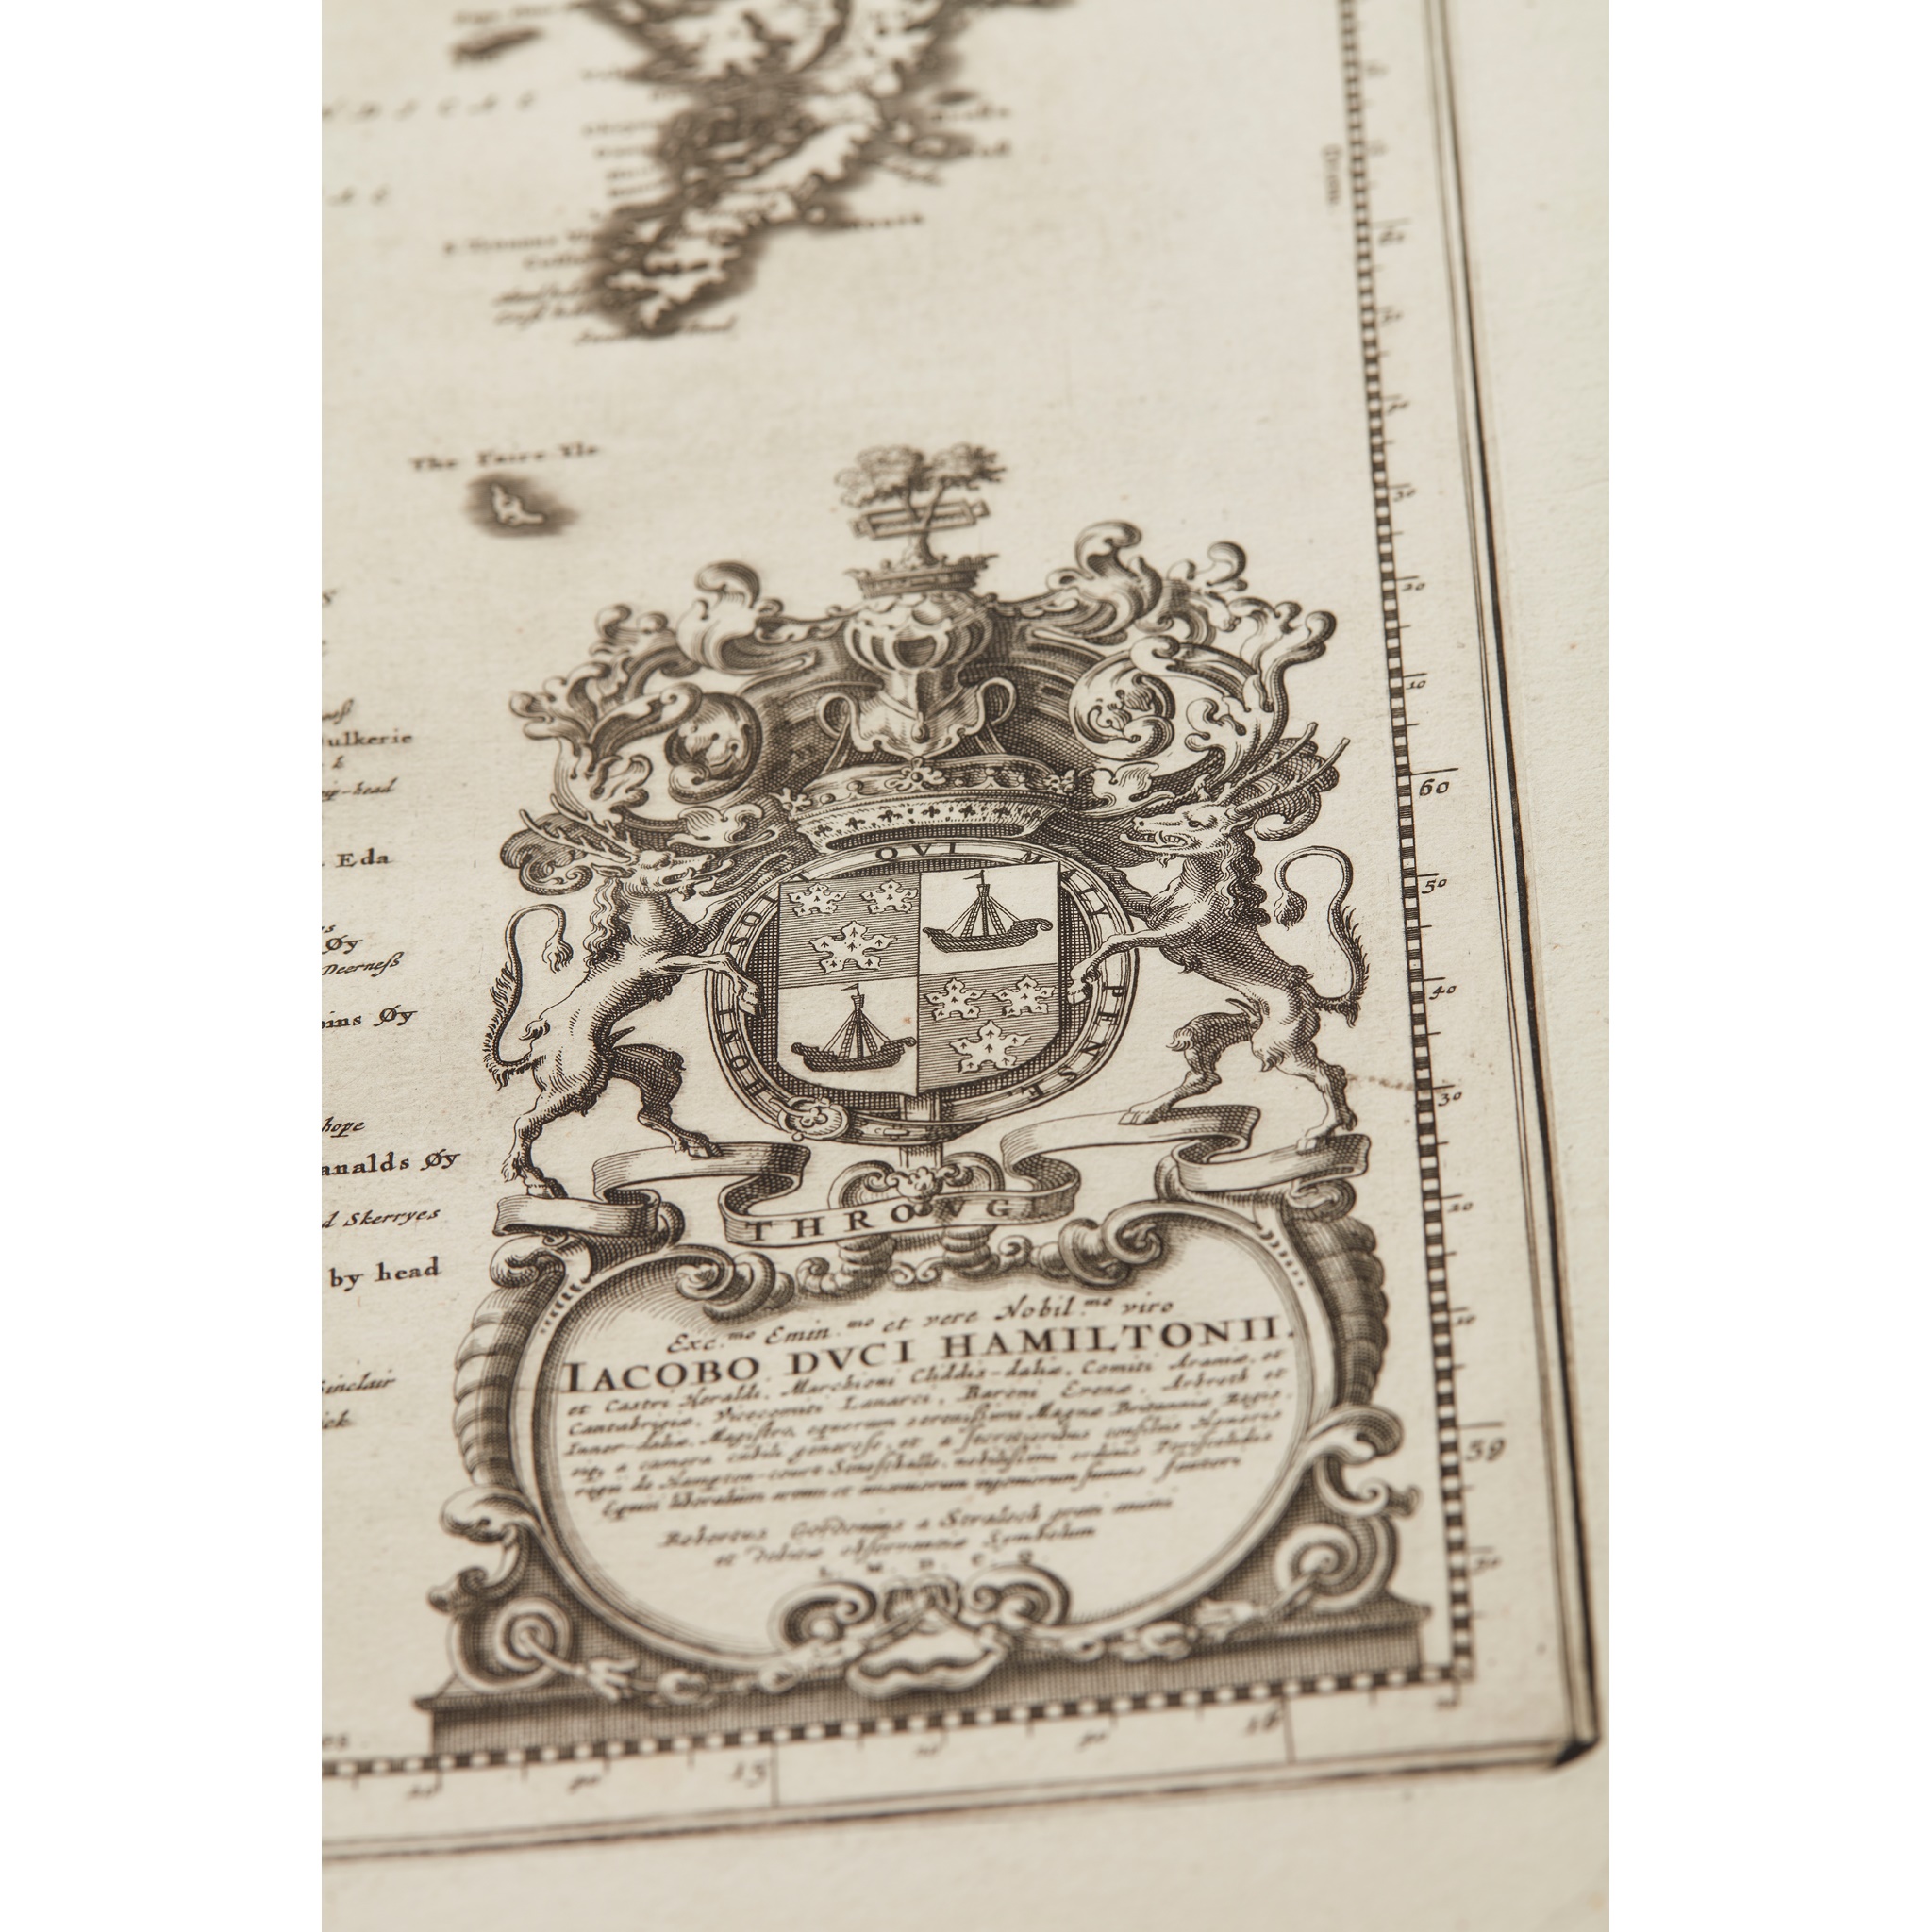 Blaeu, Joan Toonneel des Aerdryck oft Nieuwe Atlas...Vyfde Deel [Theatrum Orbis Terrarum, part V] - Image 15 of 25